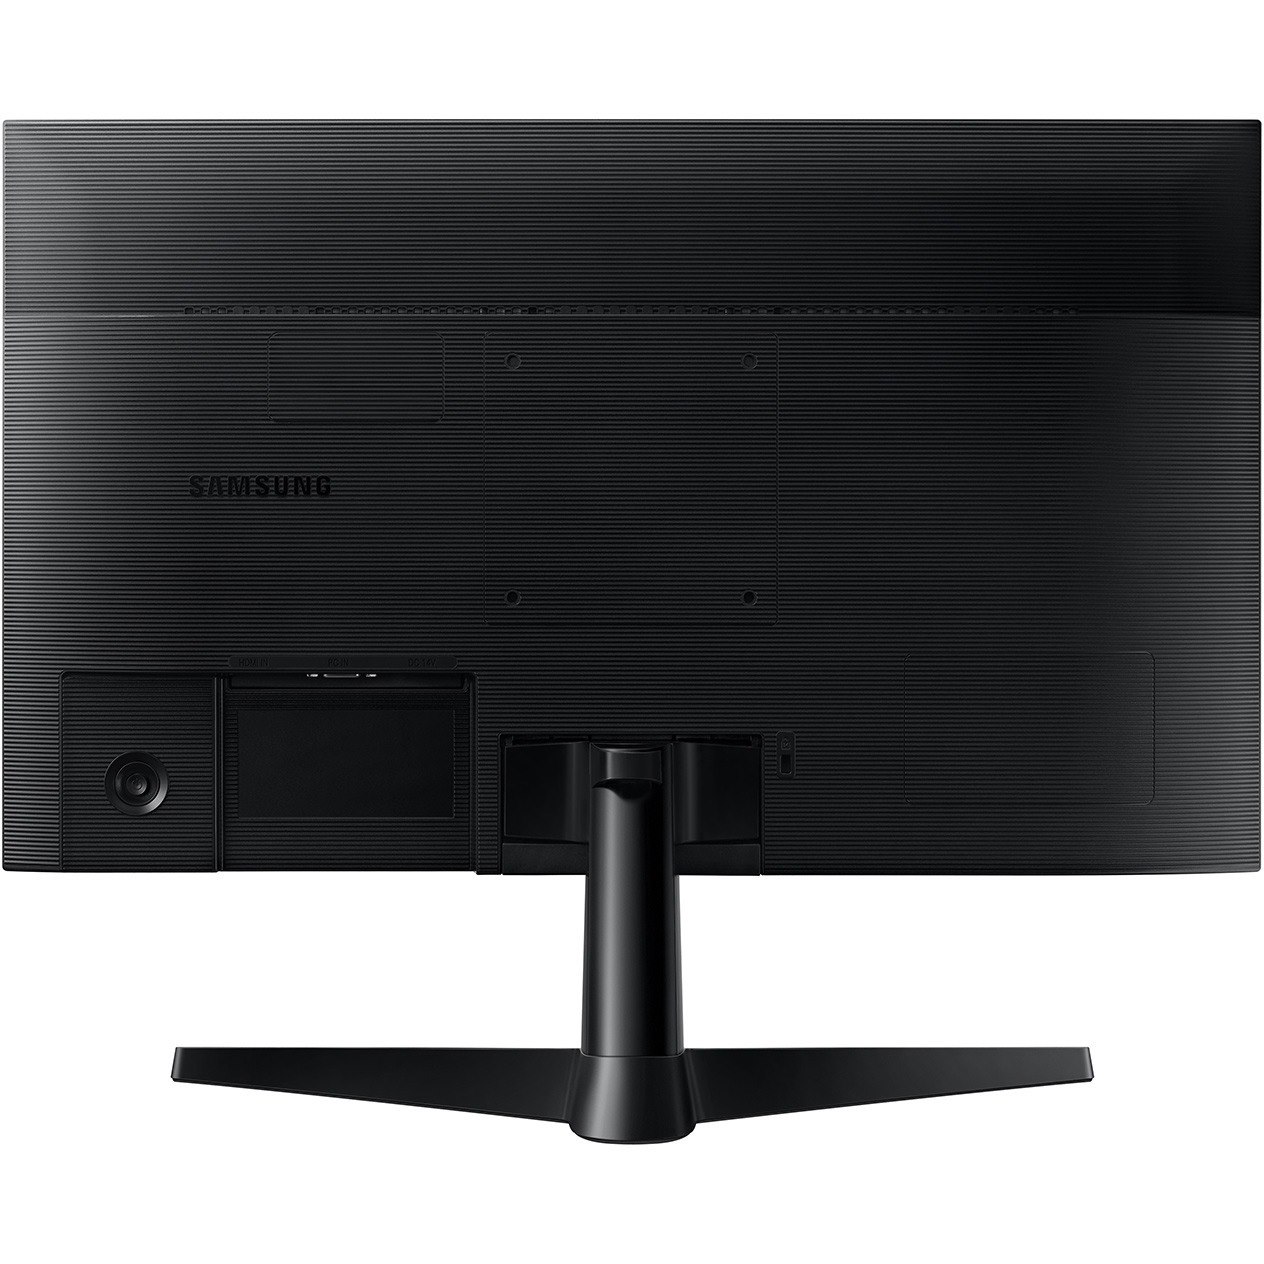 Samsung F24T350FHN 24" Class Full HD Gaming LCD Monitor - 16:9 - Dark Blue Gray